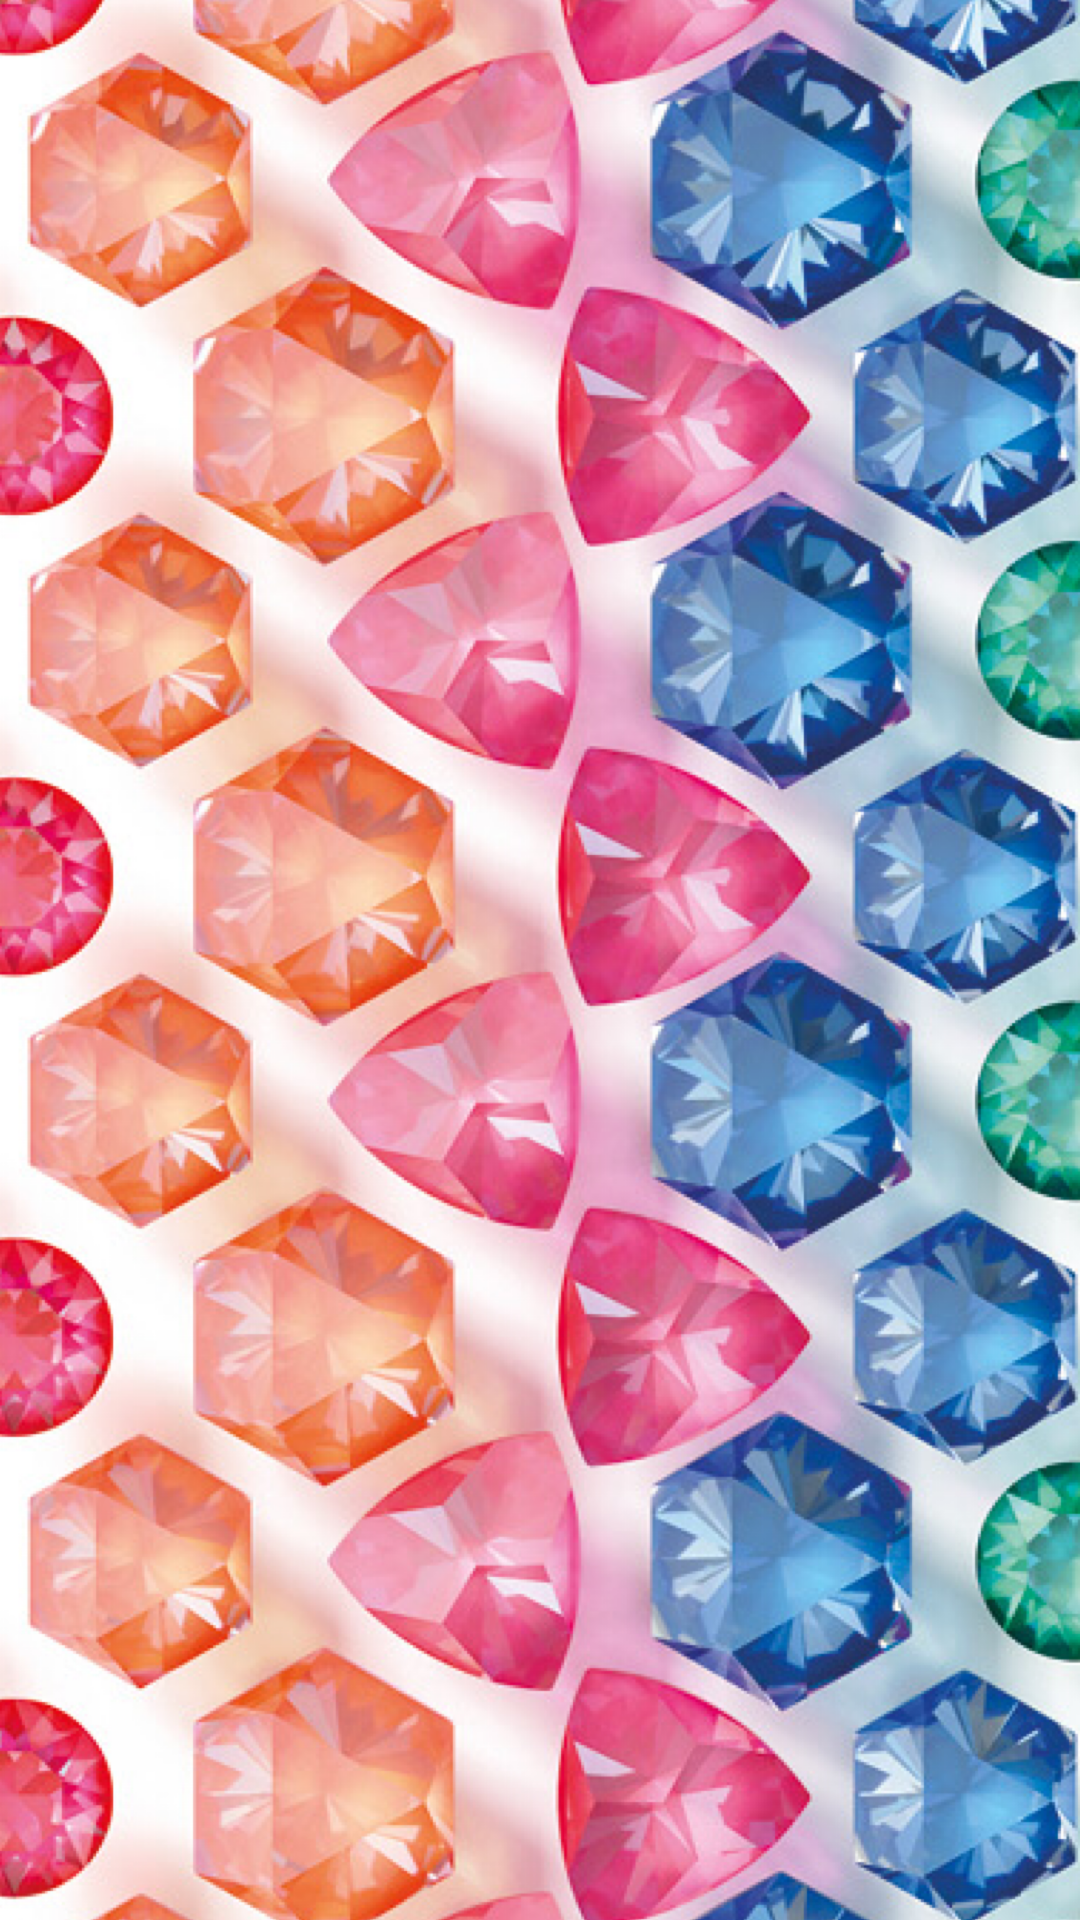 Trending Fall DeLite Colors - Bright Crystals